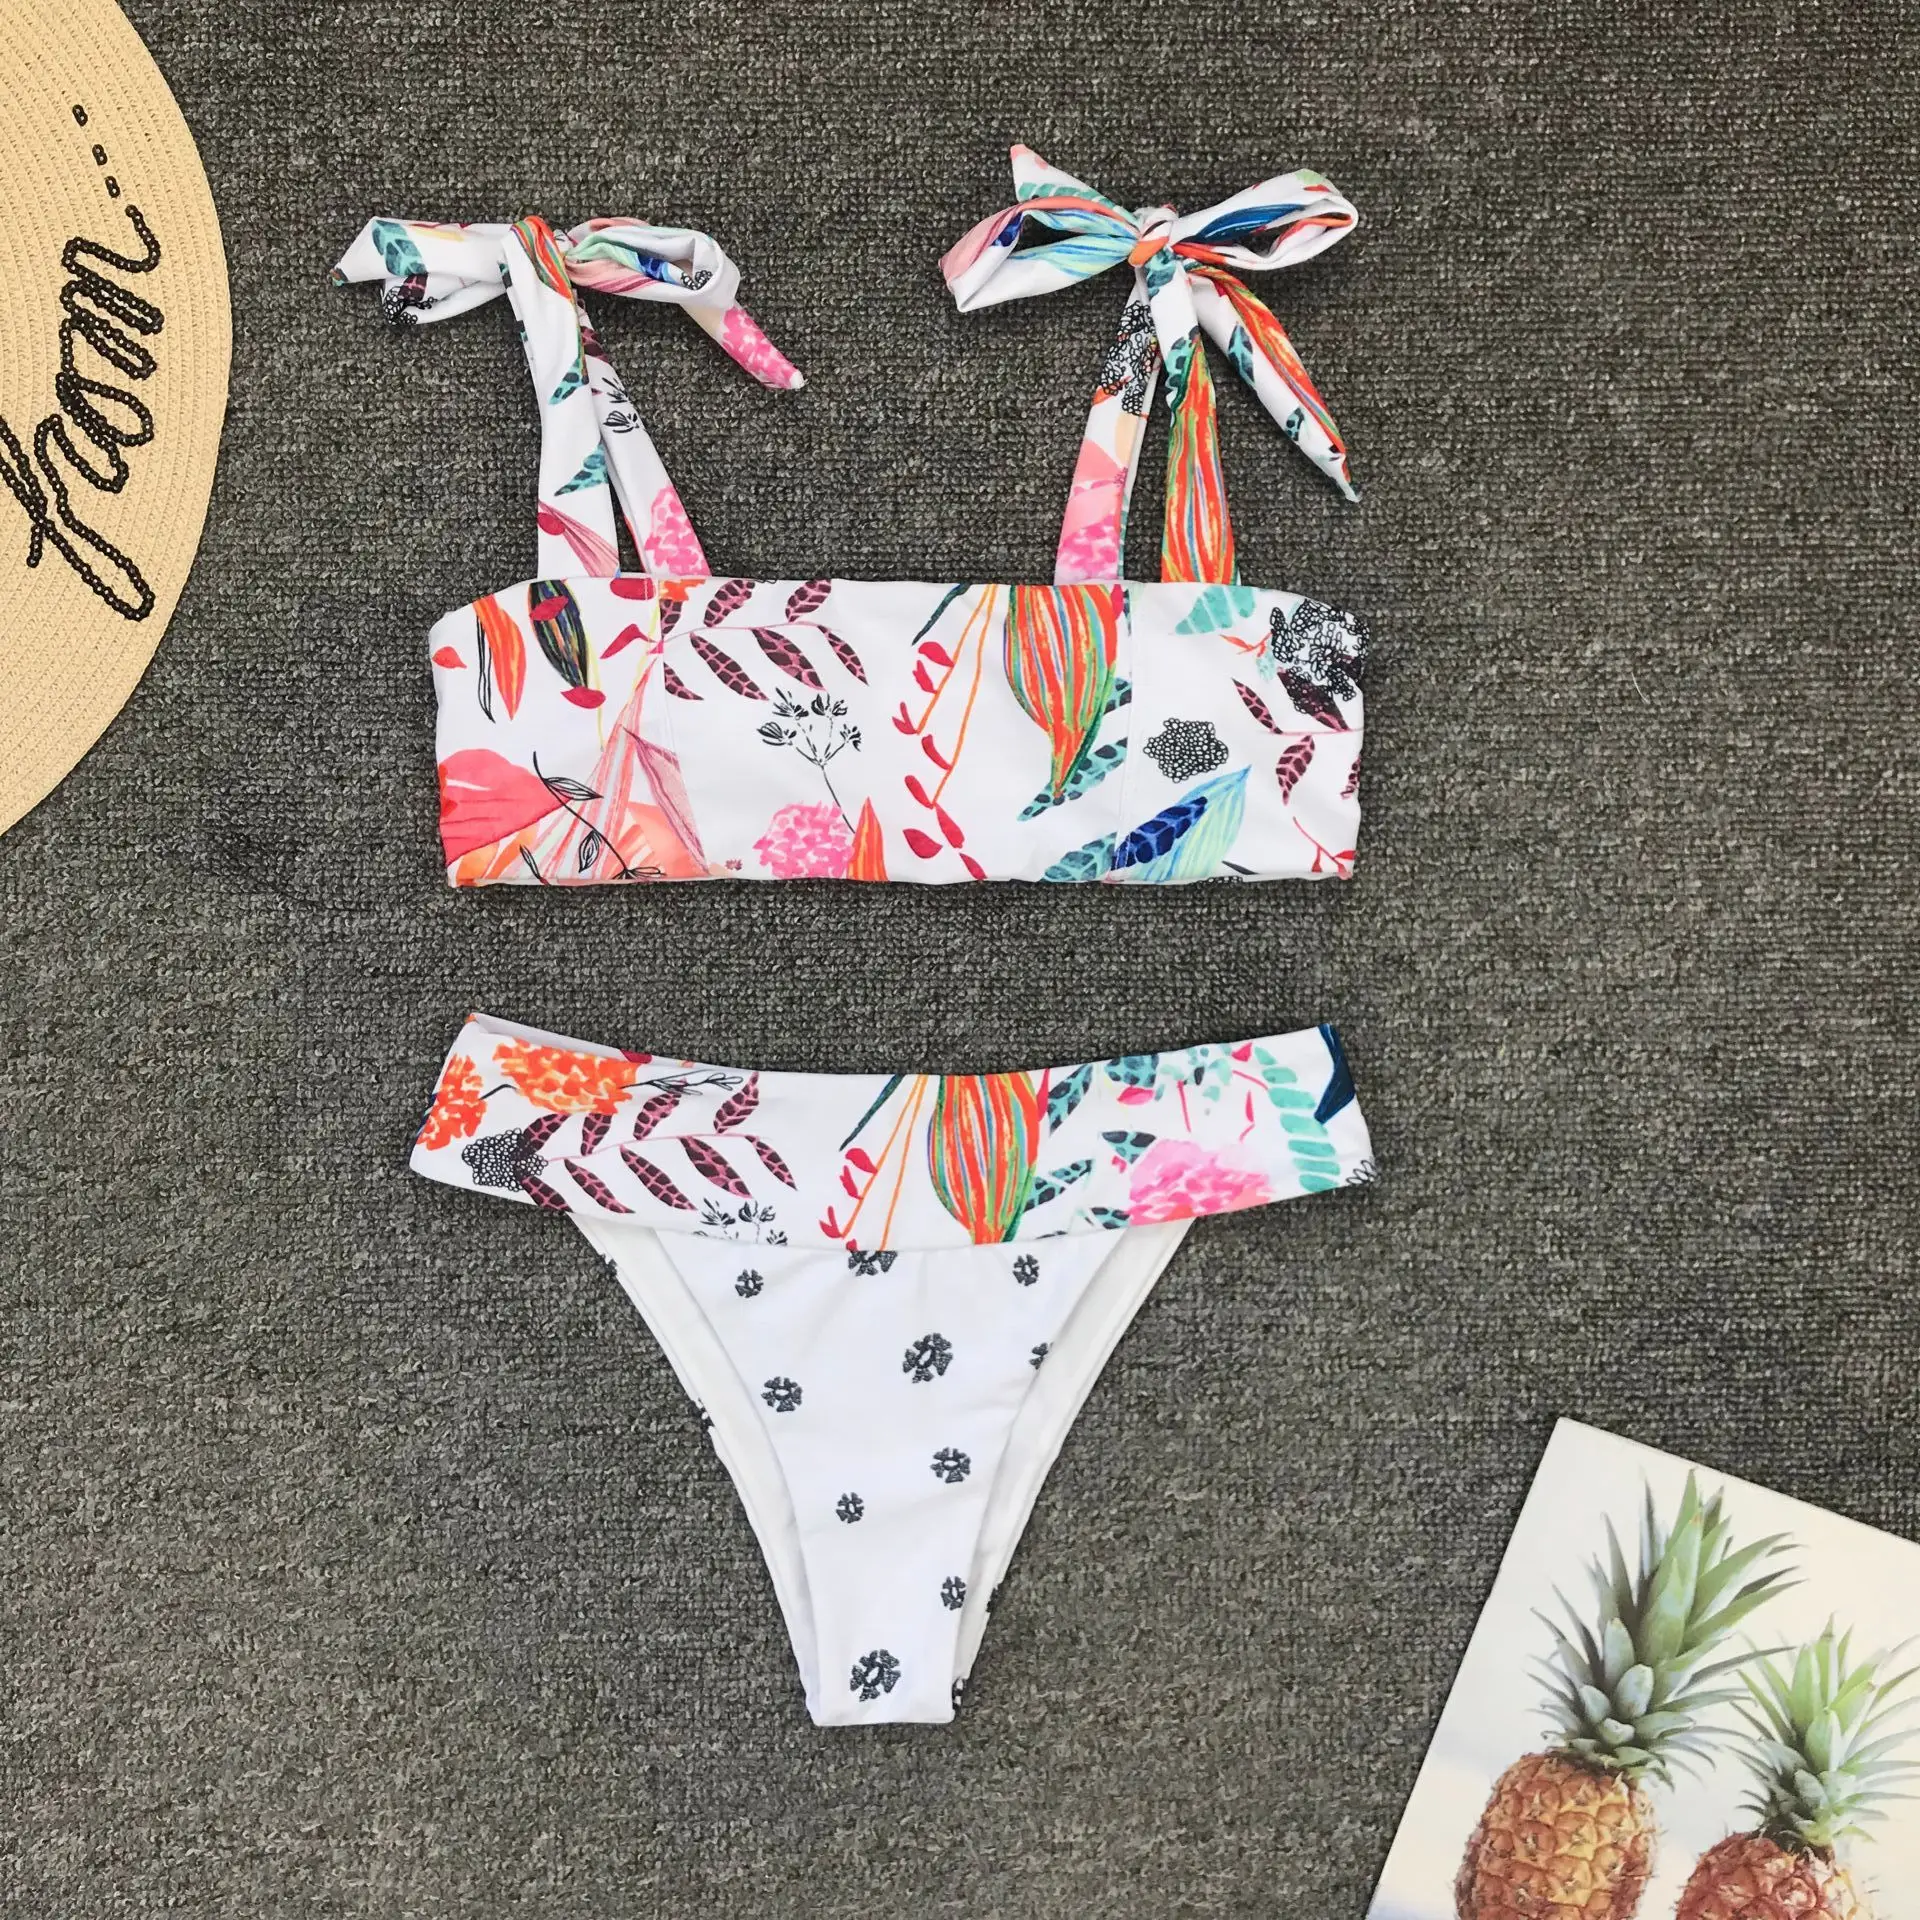 2021 Sexy Bikinis Women Swimsuit Bandage Halter Beach Wear Bathing suits Push Up Swimwear Female Brazilian Bikini Set B267 | Женская